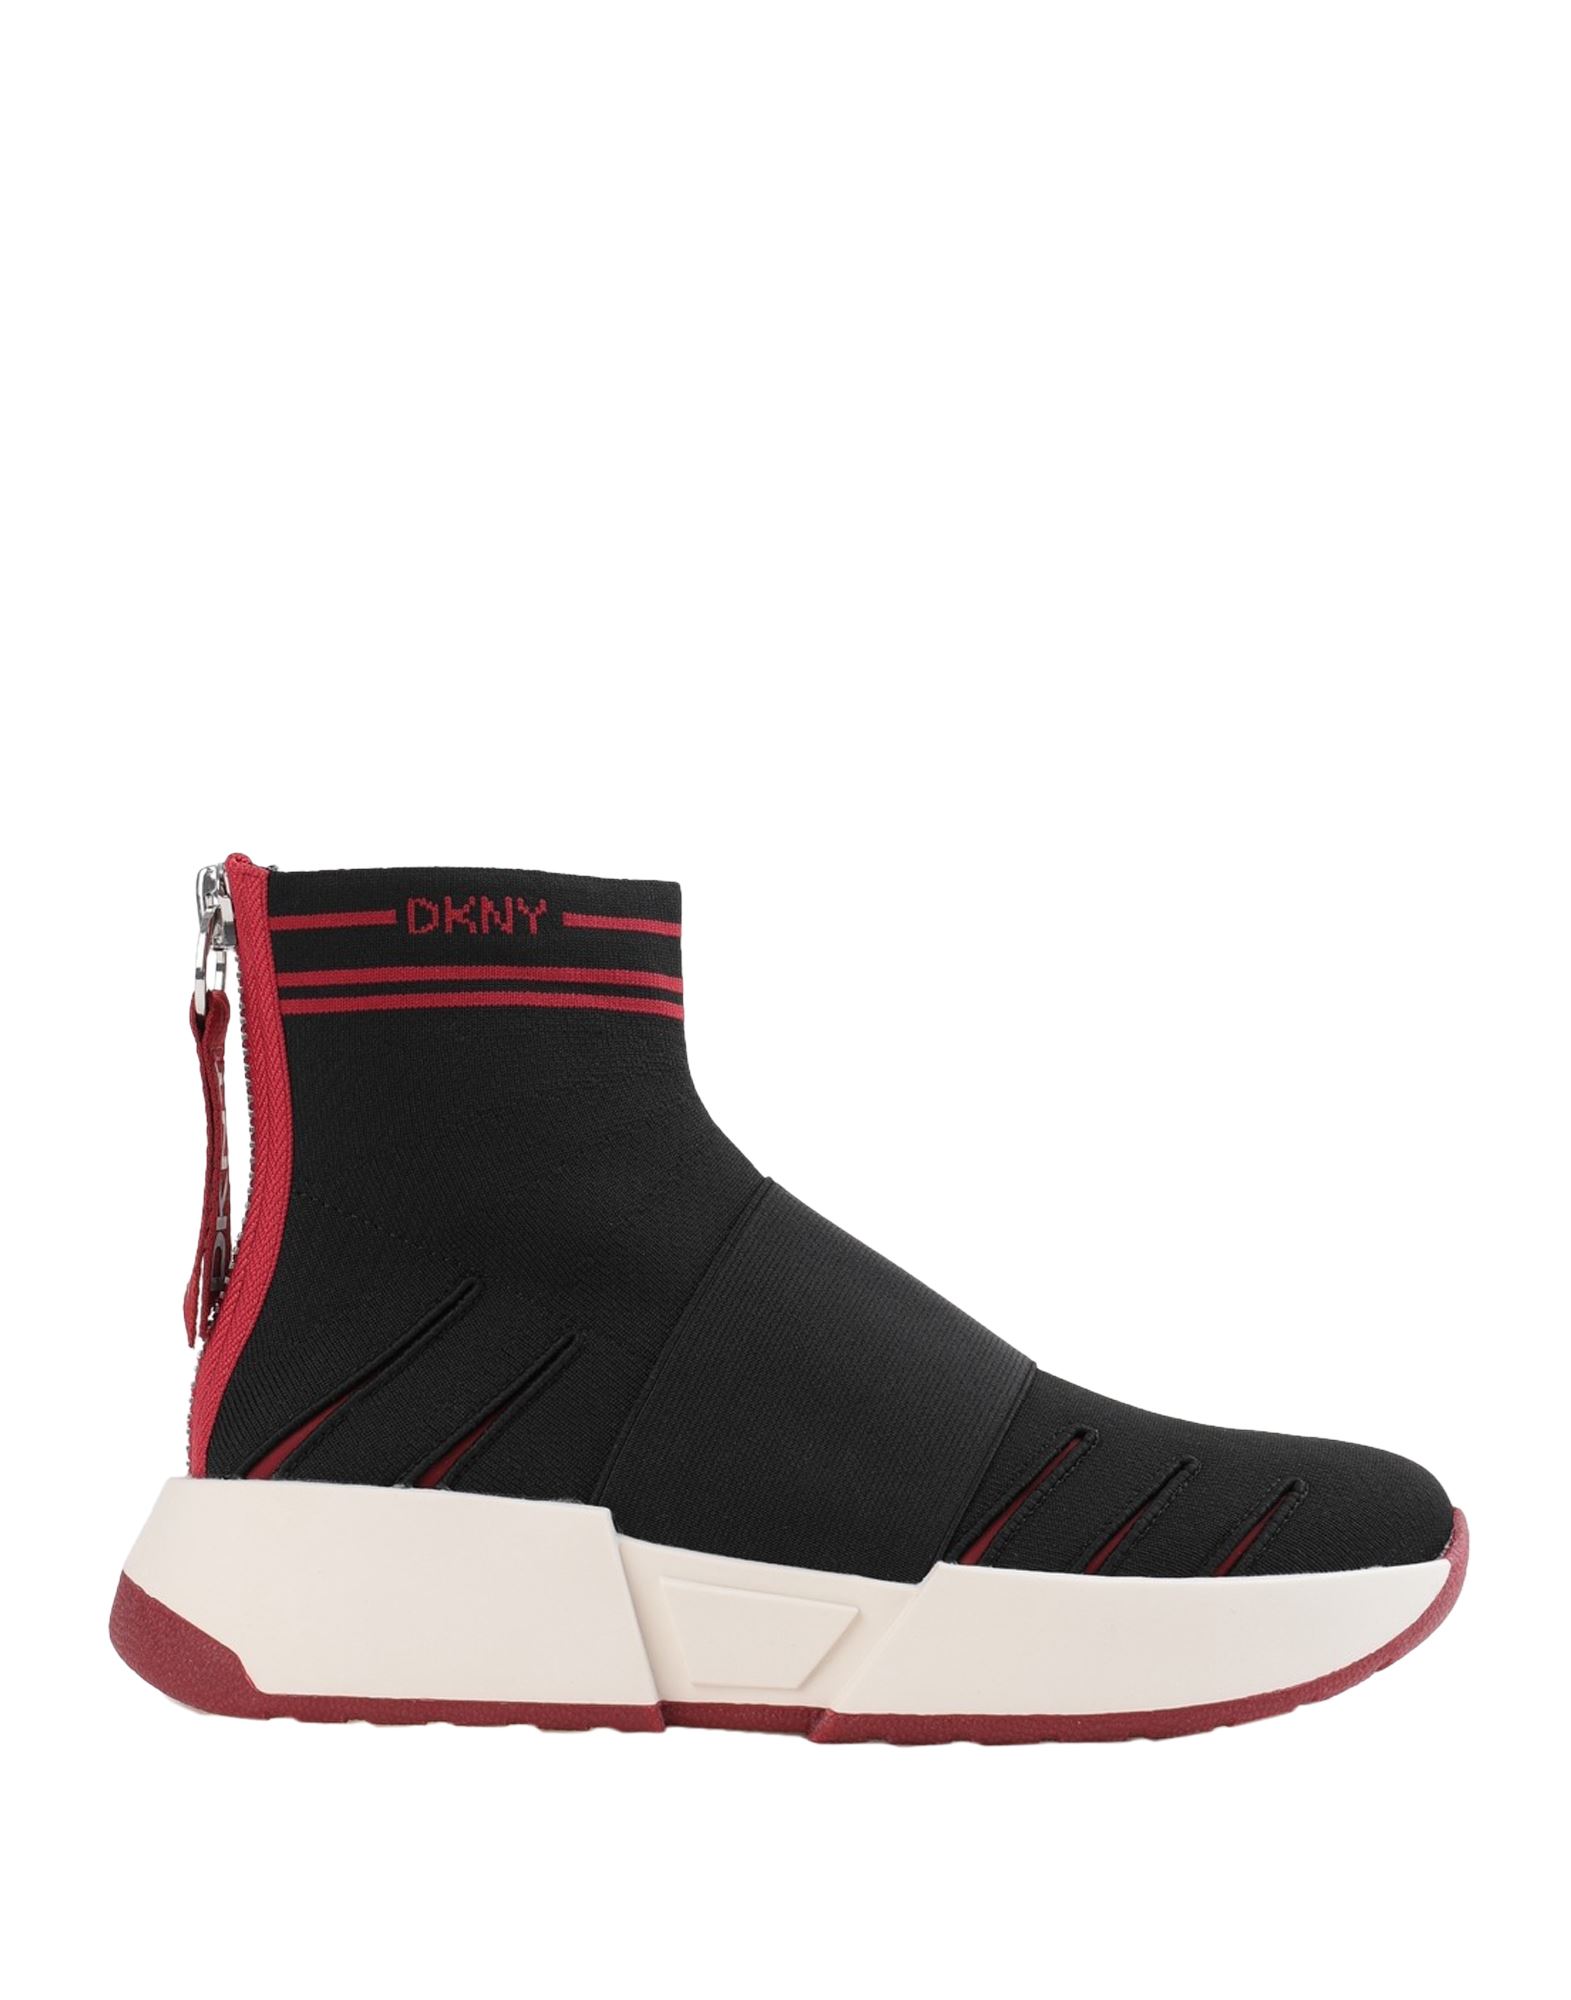 DKNY High-tops & sneakers - Item 11956133